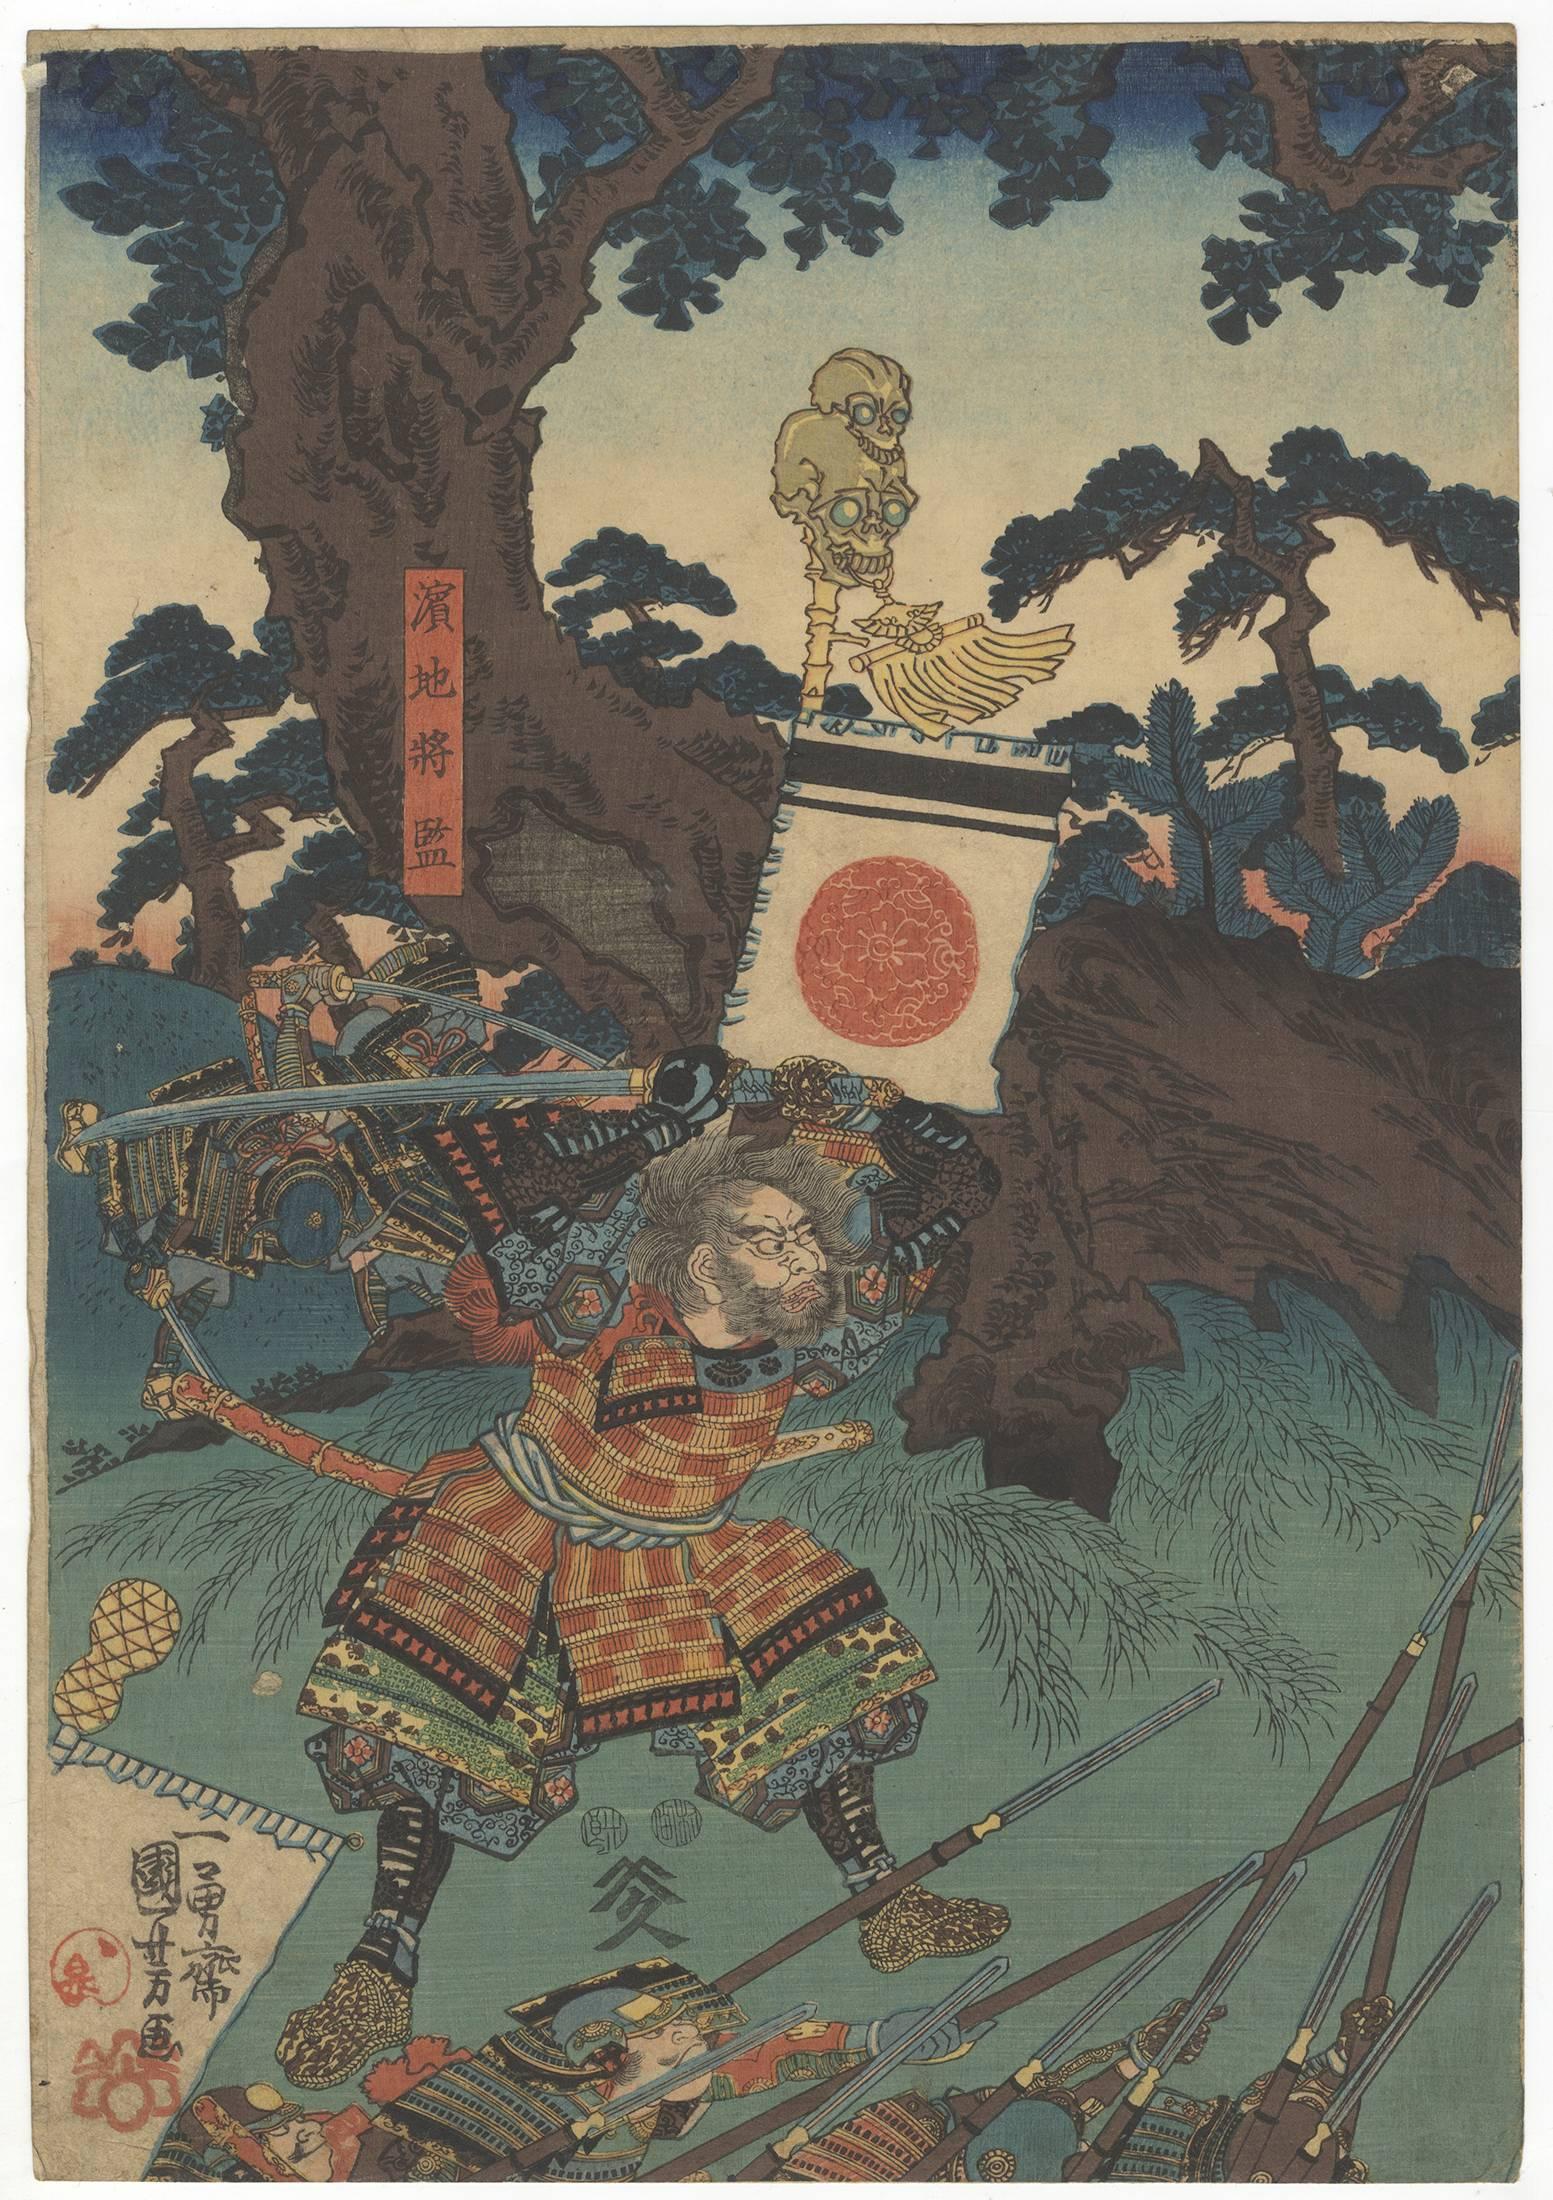 Artist: Kuniyoshi Utagawa (1798-1861)
Title: The Battle of Shizugamine
Publisher: Yamamotoya Heikichi
Published: 1852

This triptych by Kuniyoshi depicts a real battle in the history of Japan that took place in 1583 at Shizugatake. However,